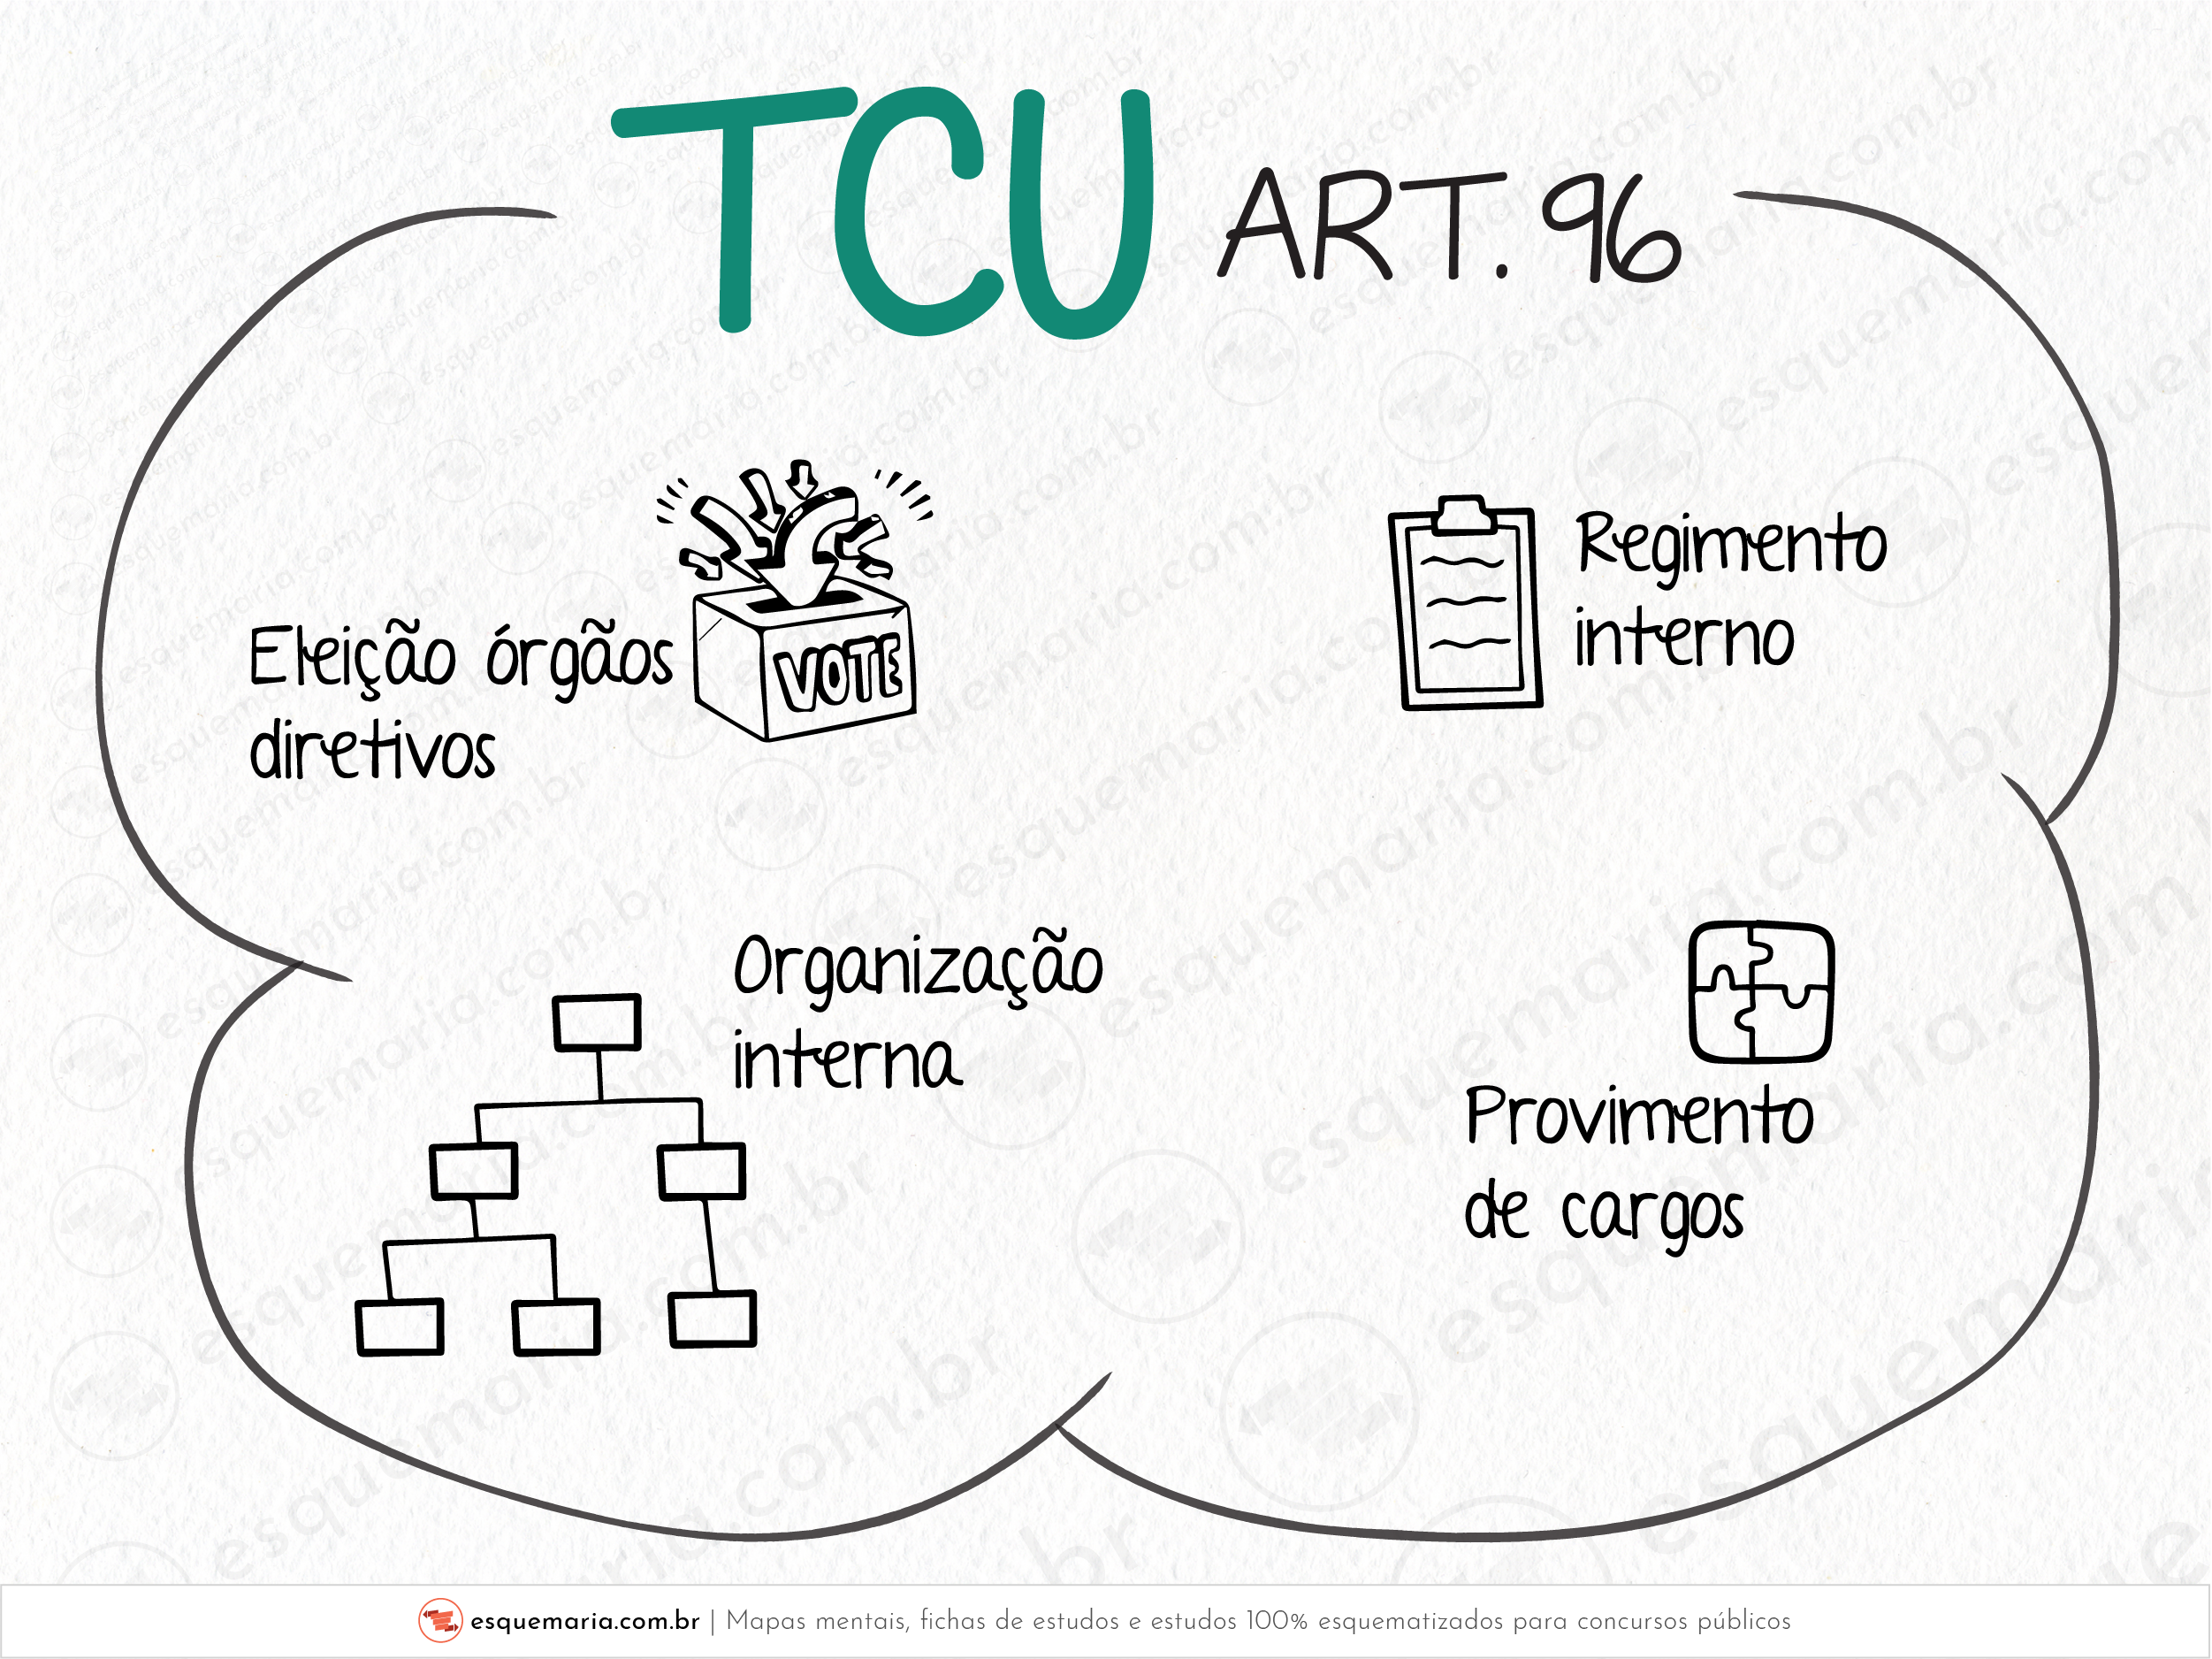 TCU - art 96-01